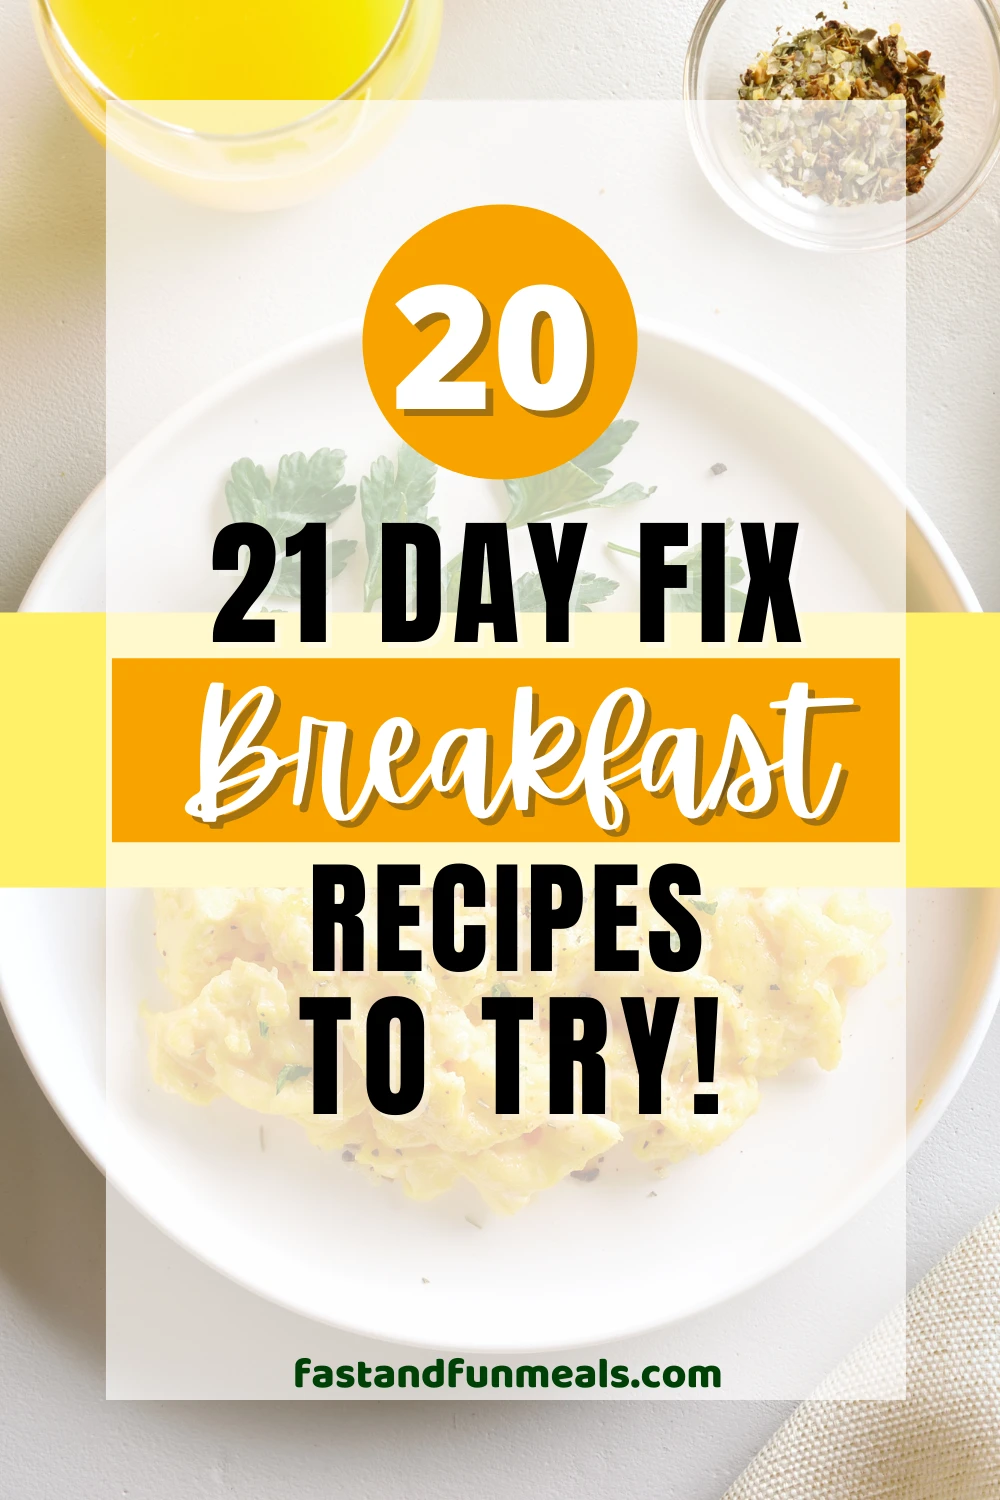 21 Day Fix breakfast ideas - Extra Black Olives